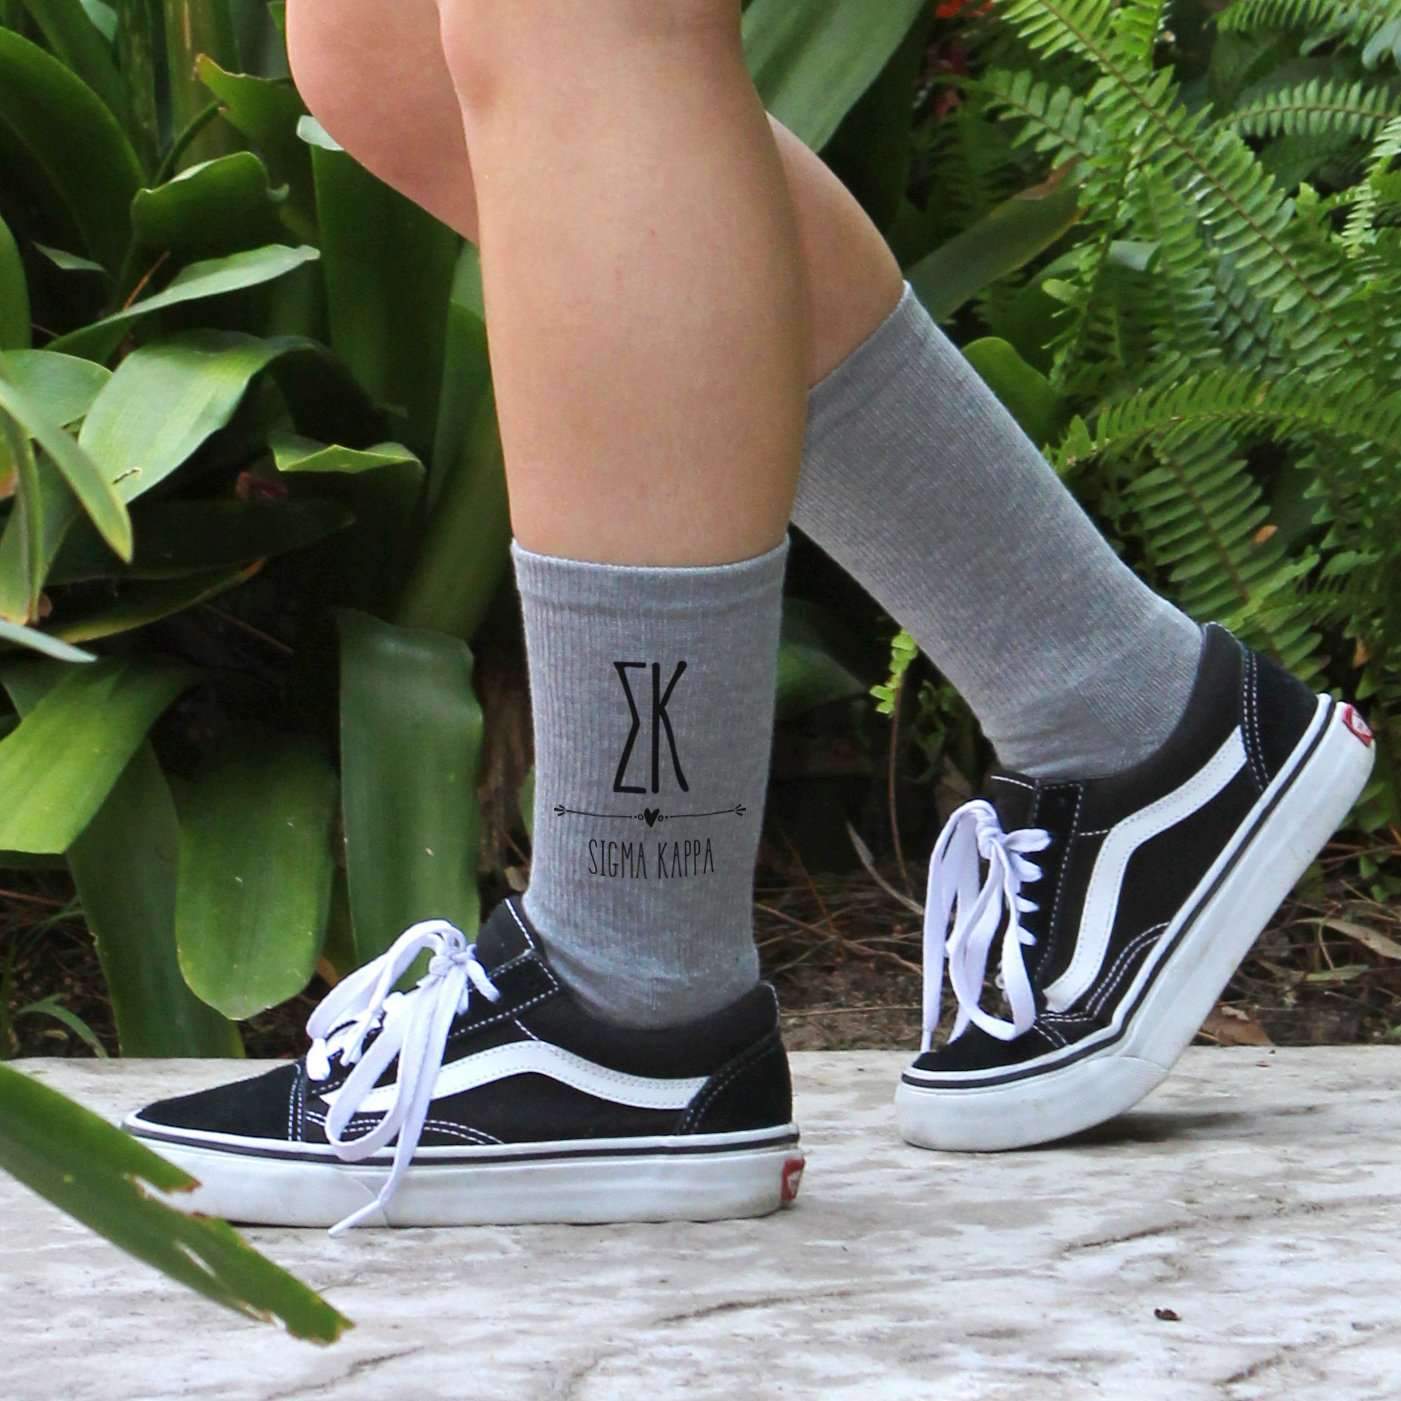 Sigma Kappa sorority name and letters custom printed on heather gray crew socks